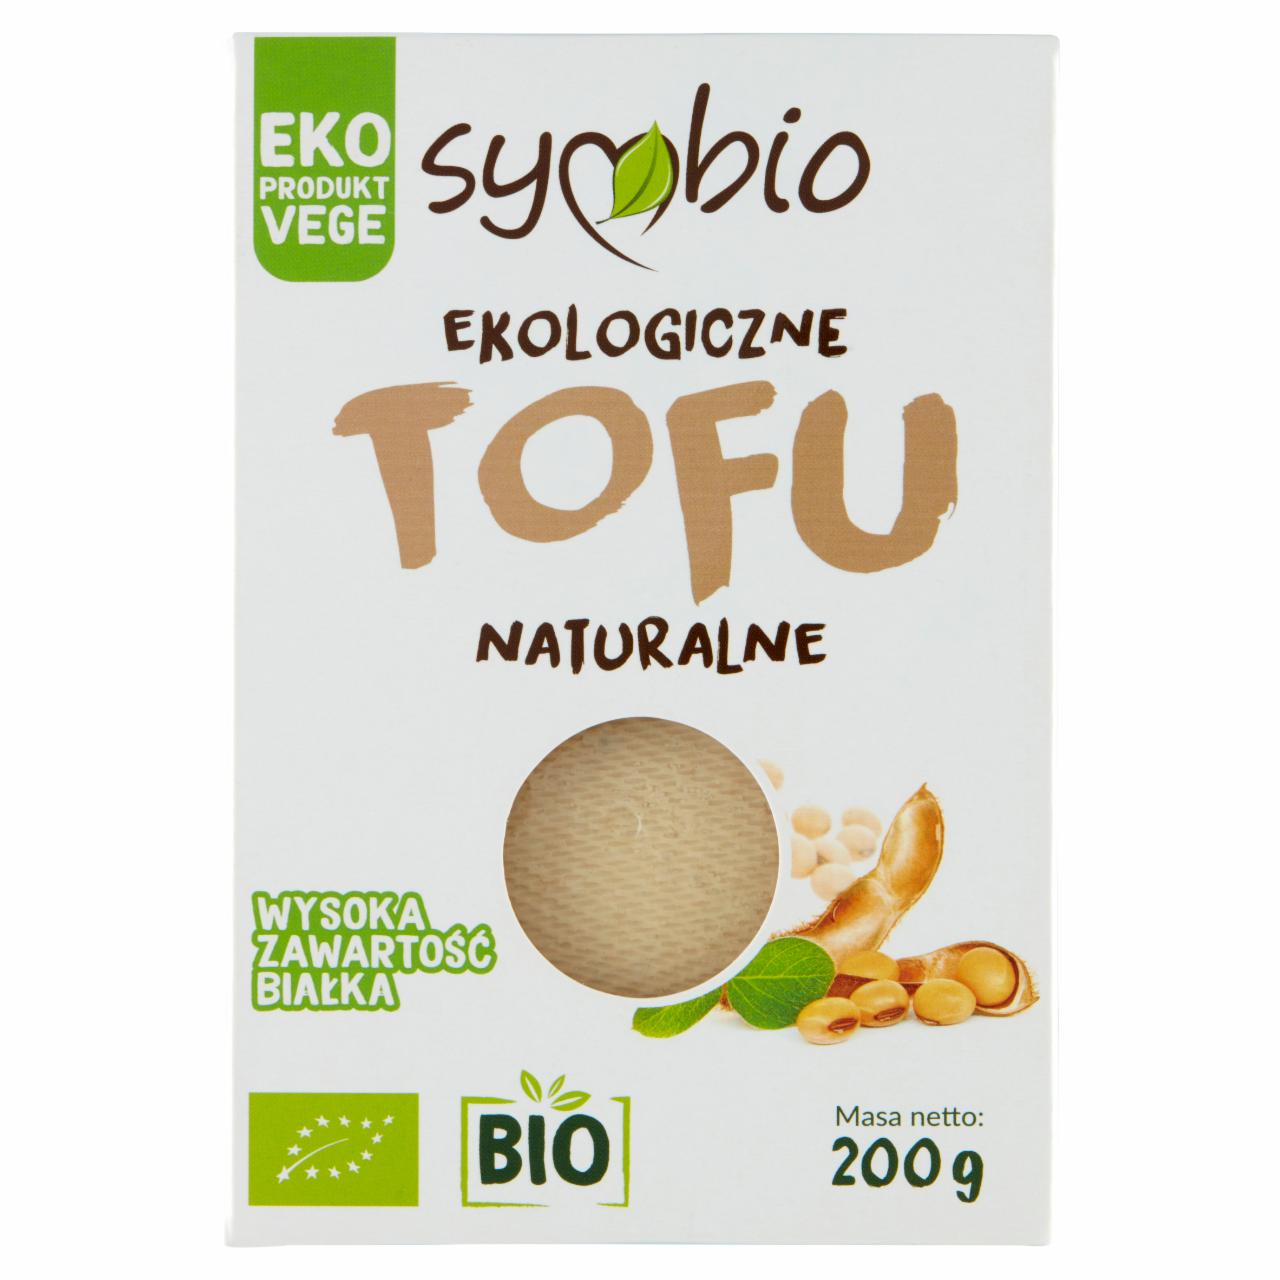 Zdjęcia - Symbio Ekologiczne tofu naturalne 200 g